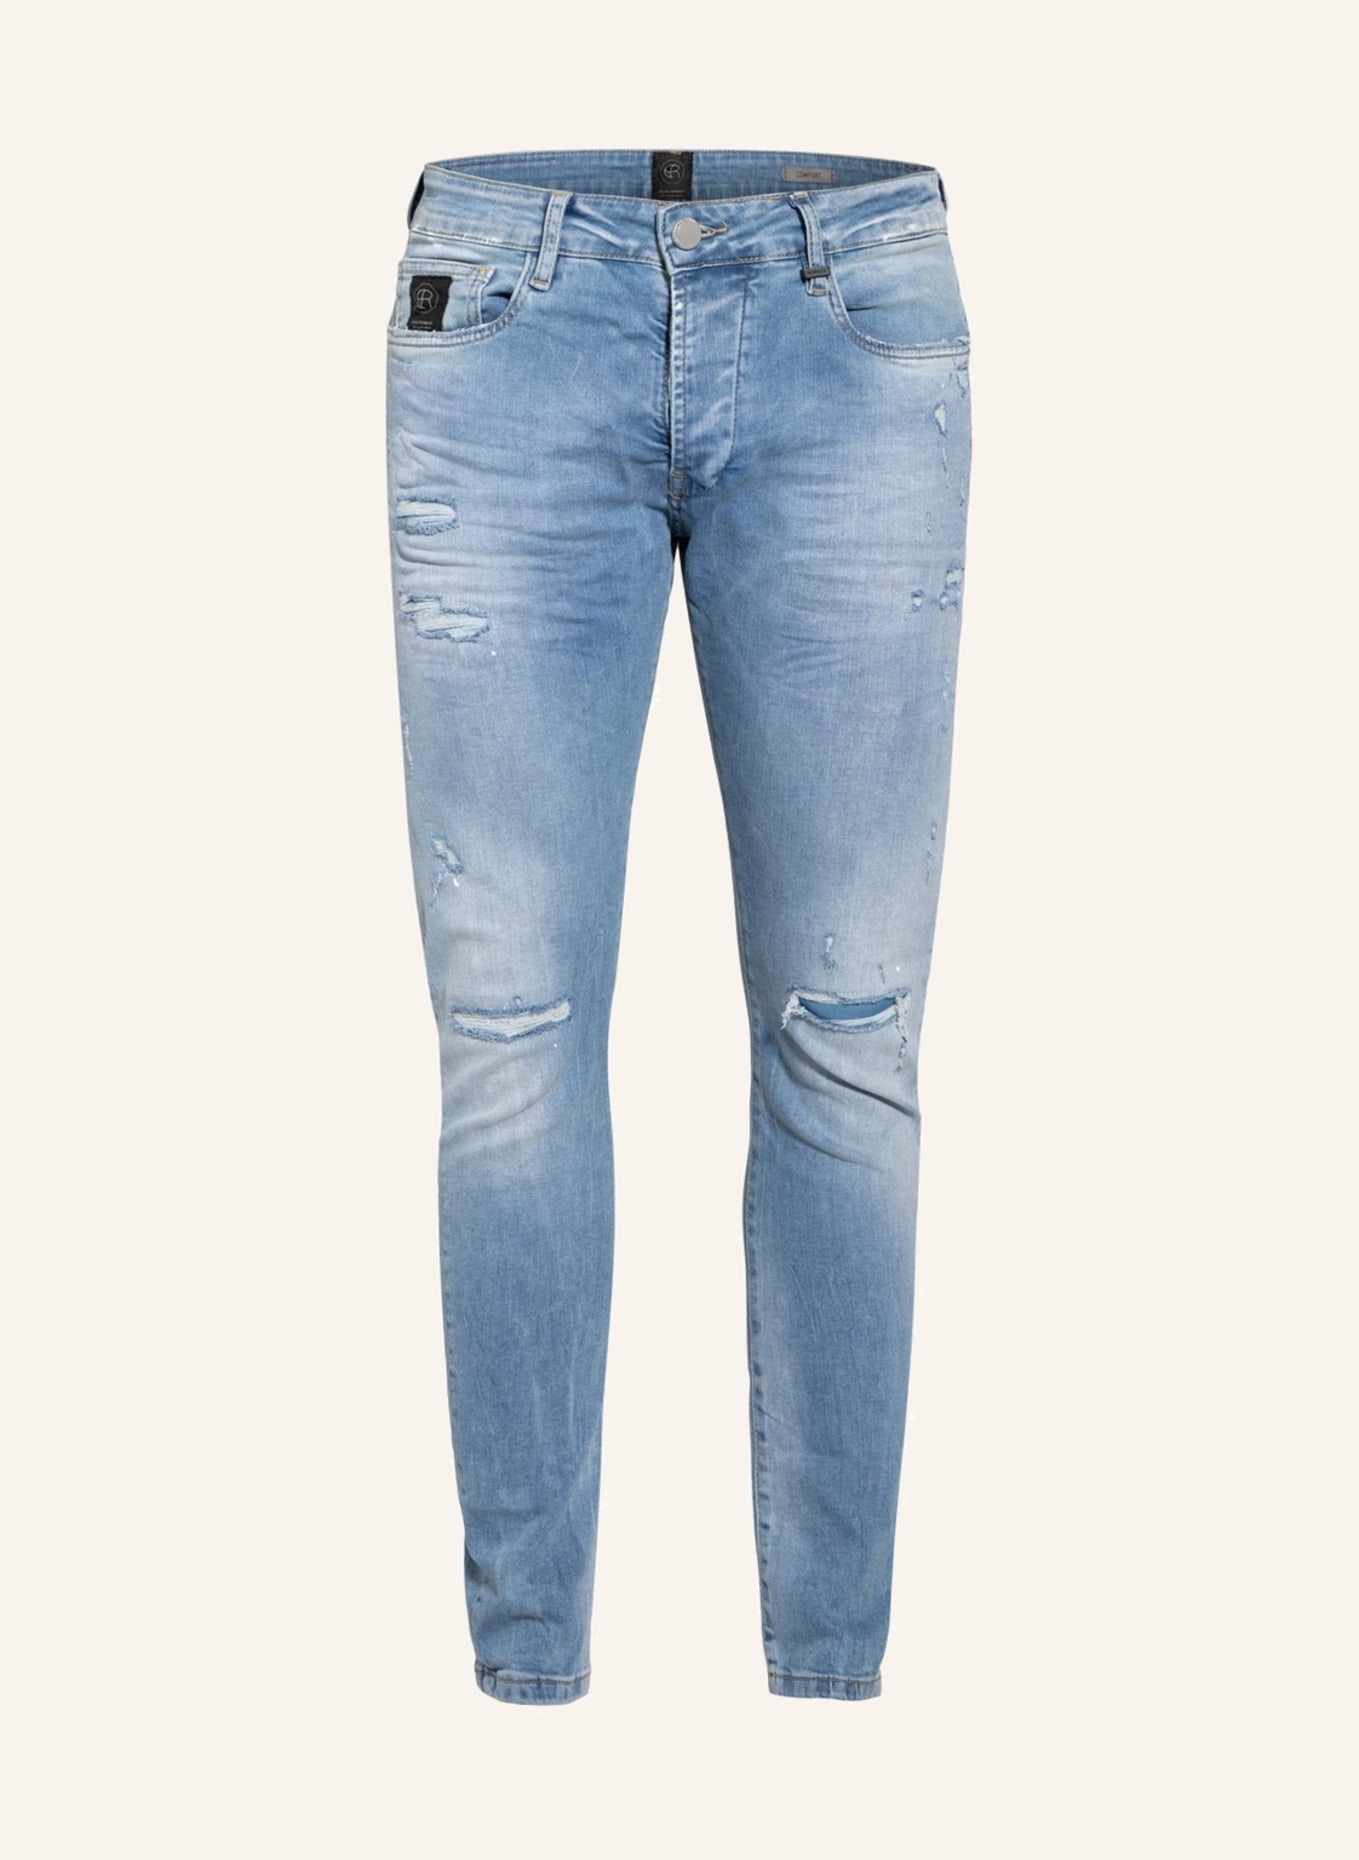 ELIAS RUMELIS Jeans ERNOEL Comfort Fit, Farbe: 568 berry blue (Bild 1)